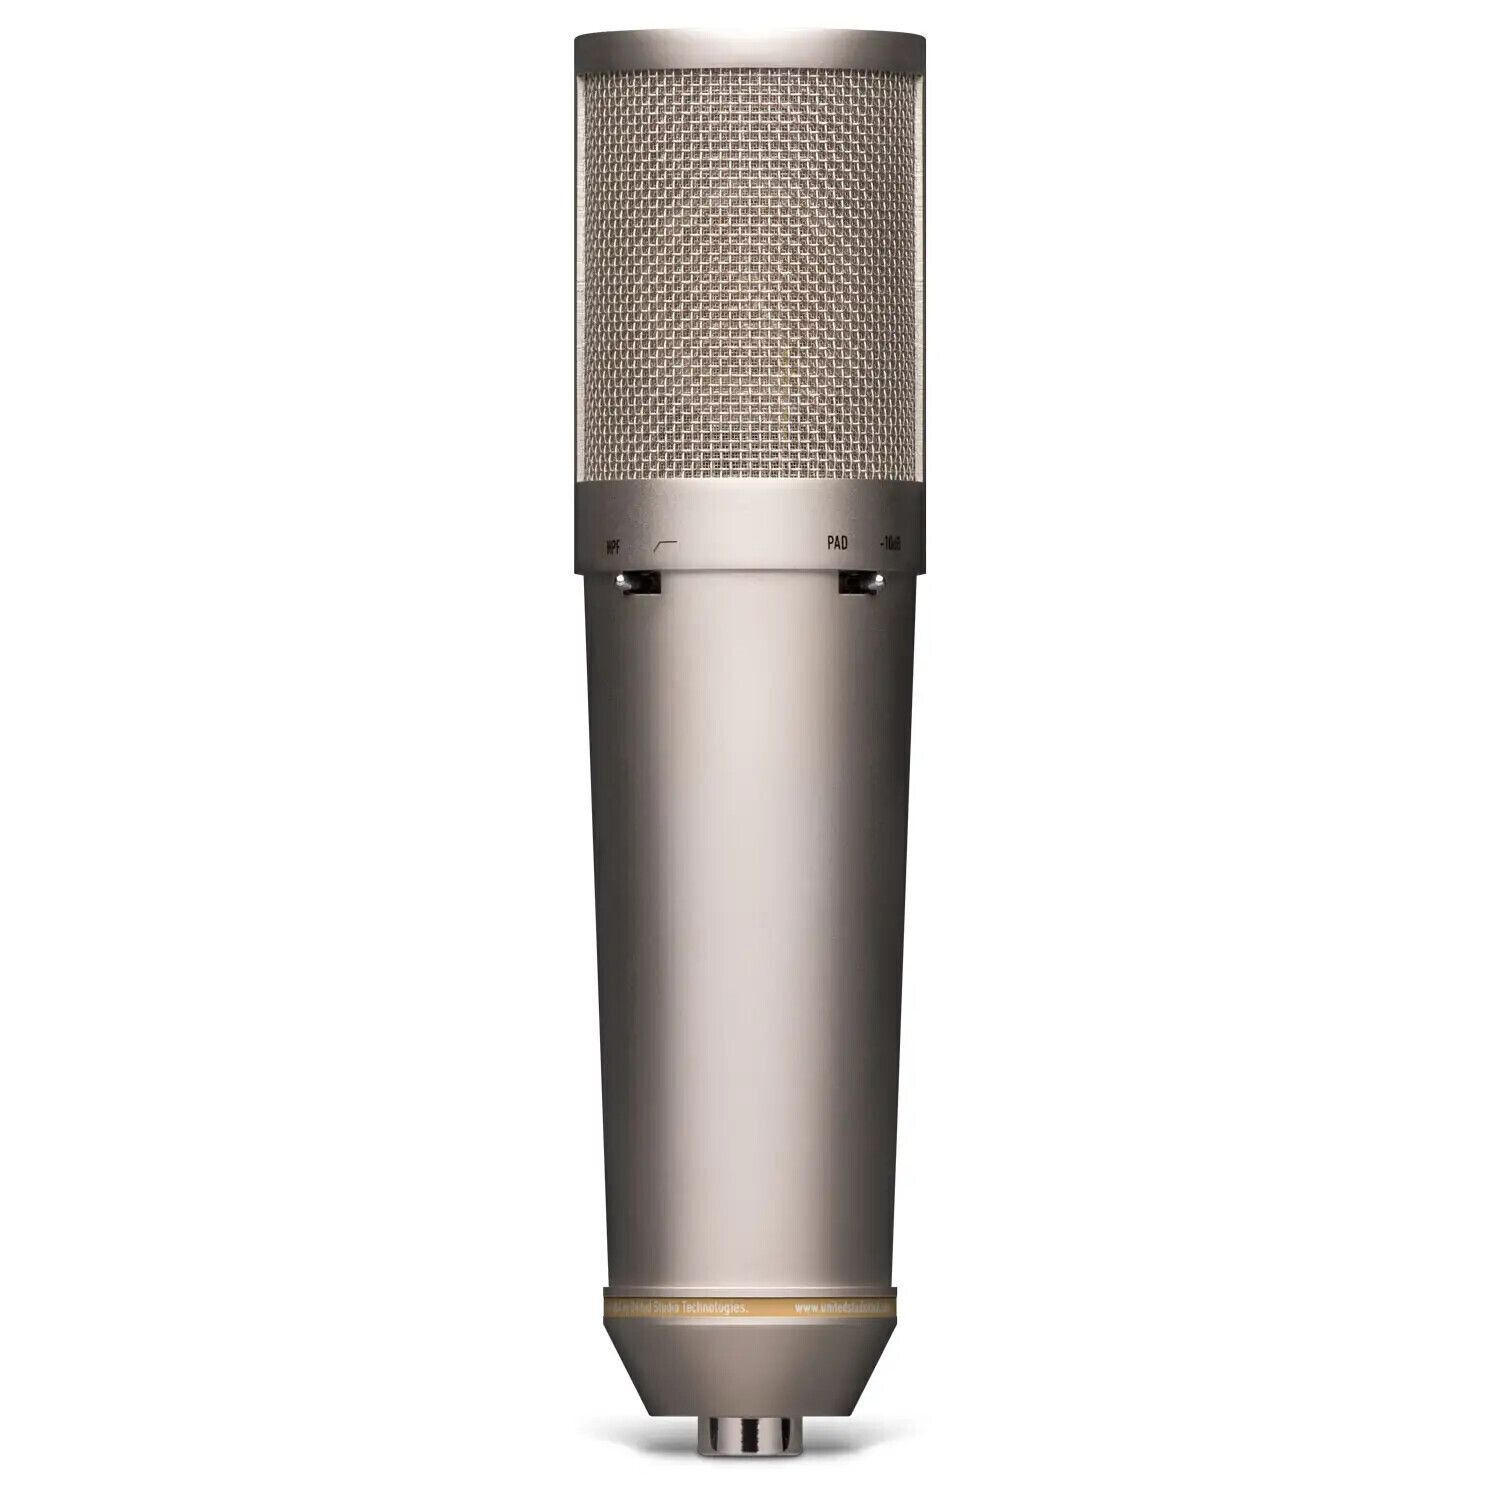 United Studio Technologies Twin 87 Microphone Конденсаторные микрофоны